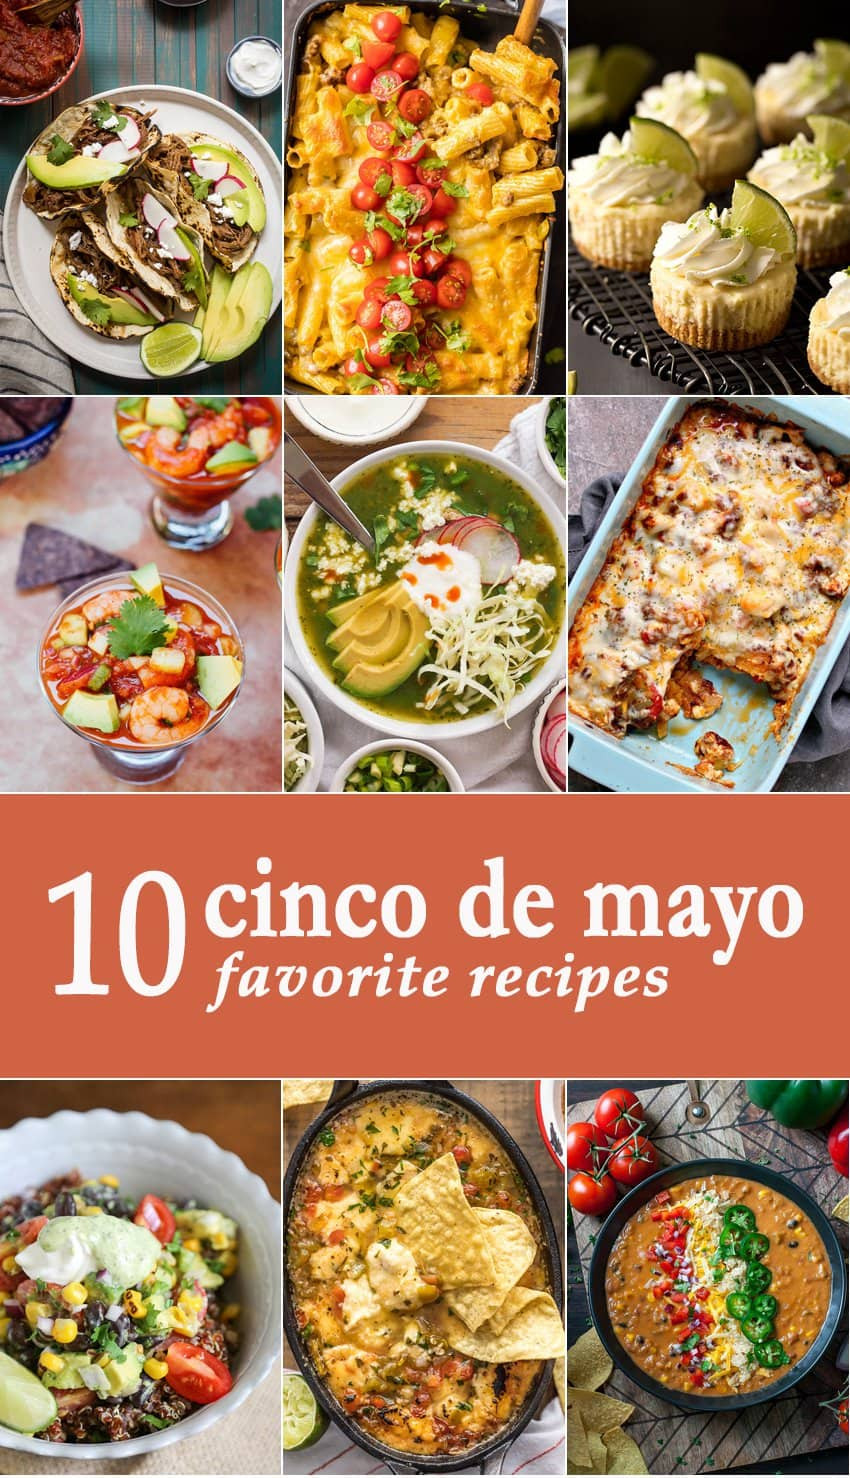 Cinco De Mayo Foods Ideas
 10 Favorite Cinco de Mayo Recipes The Cookie Rookie